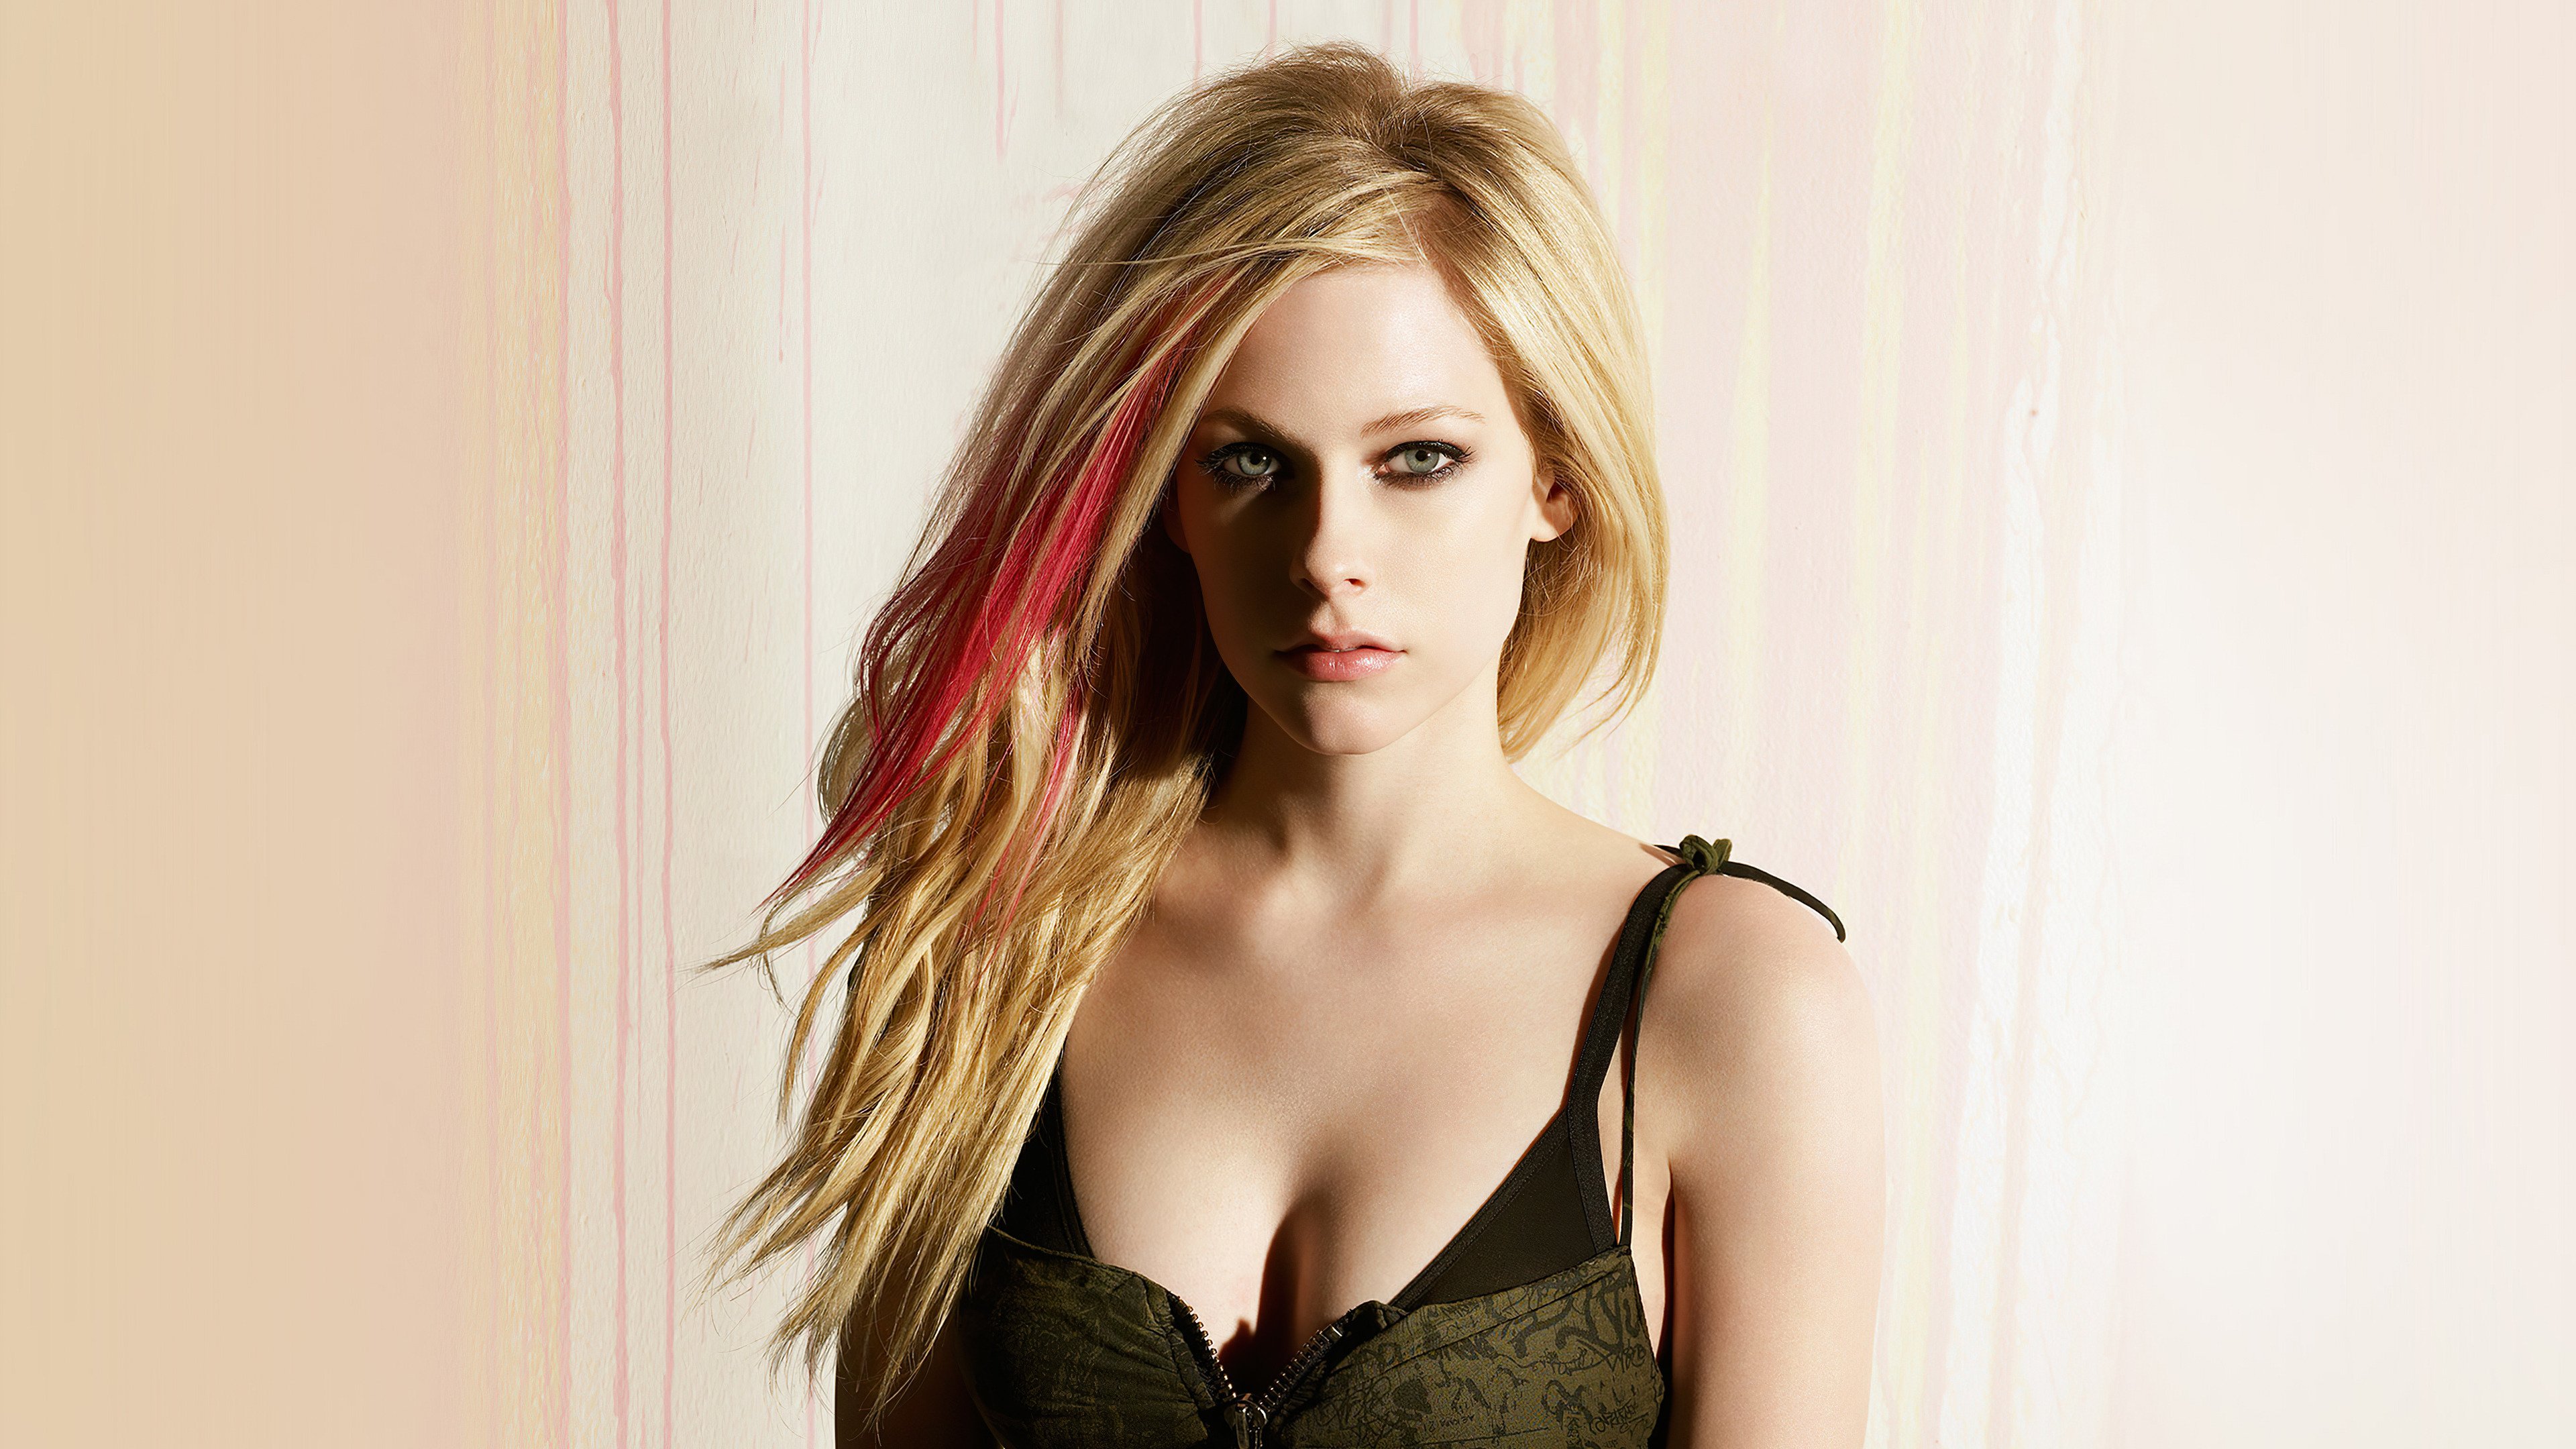 Wallpaper Avril Lavigne